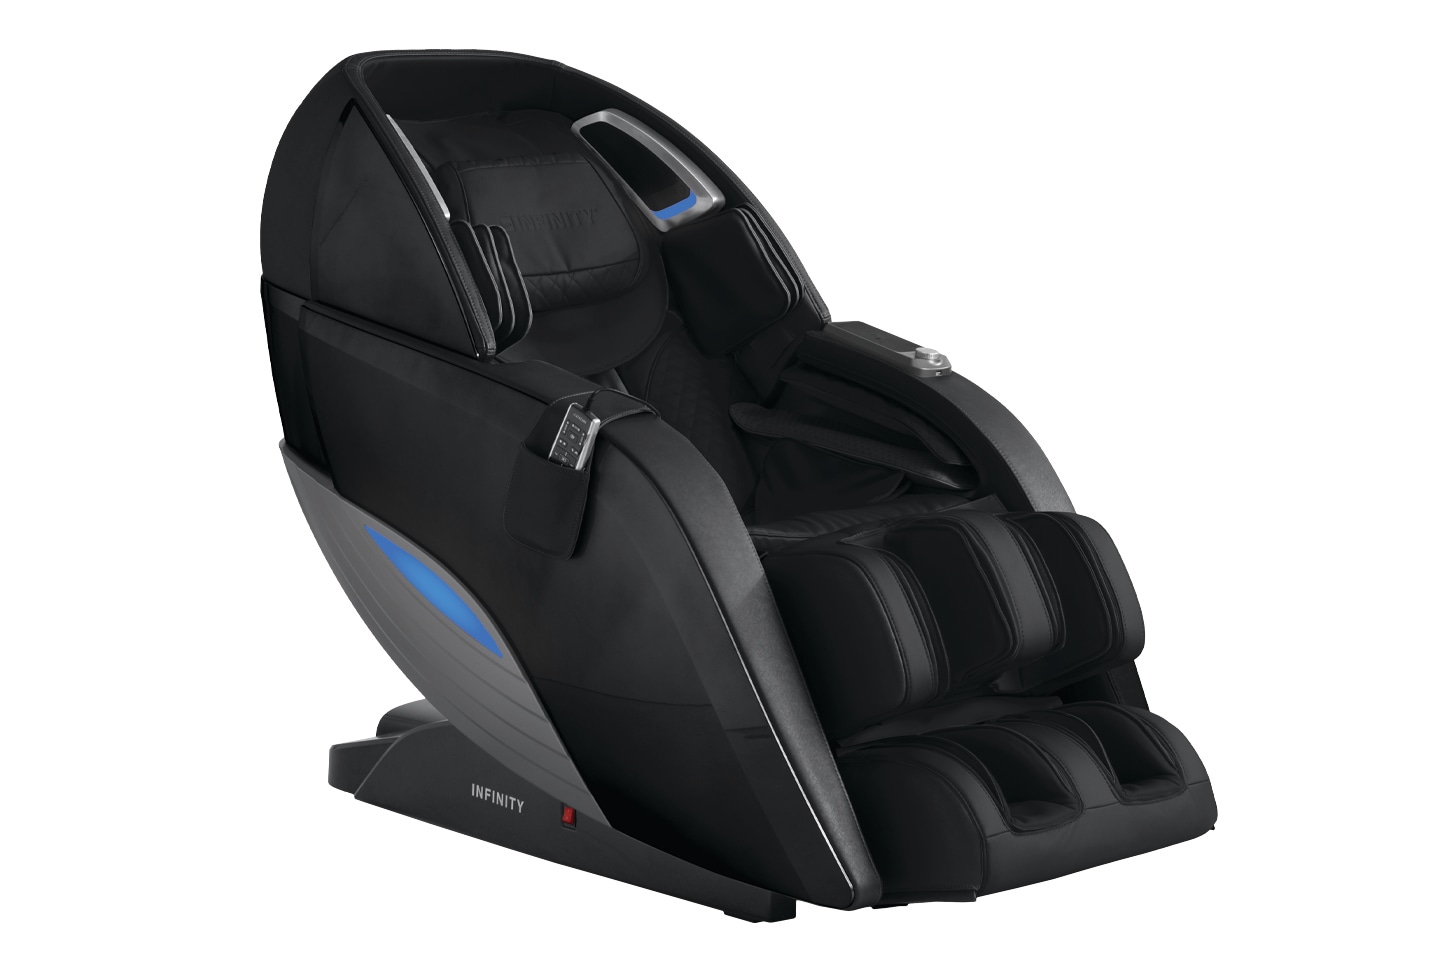 Dynasty™ 4D Massage Chair